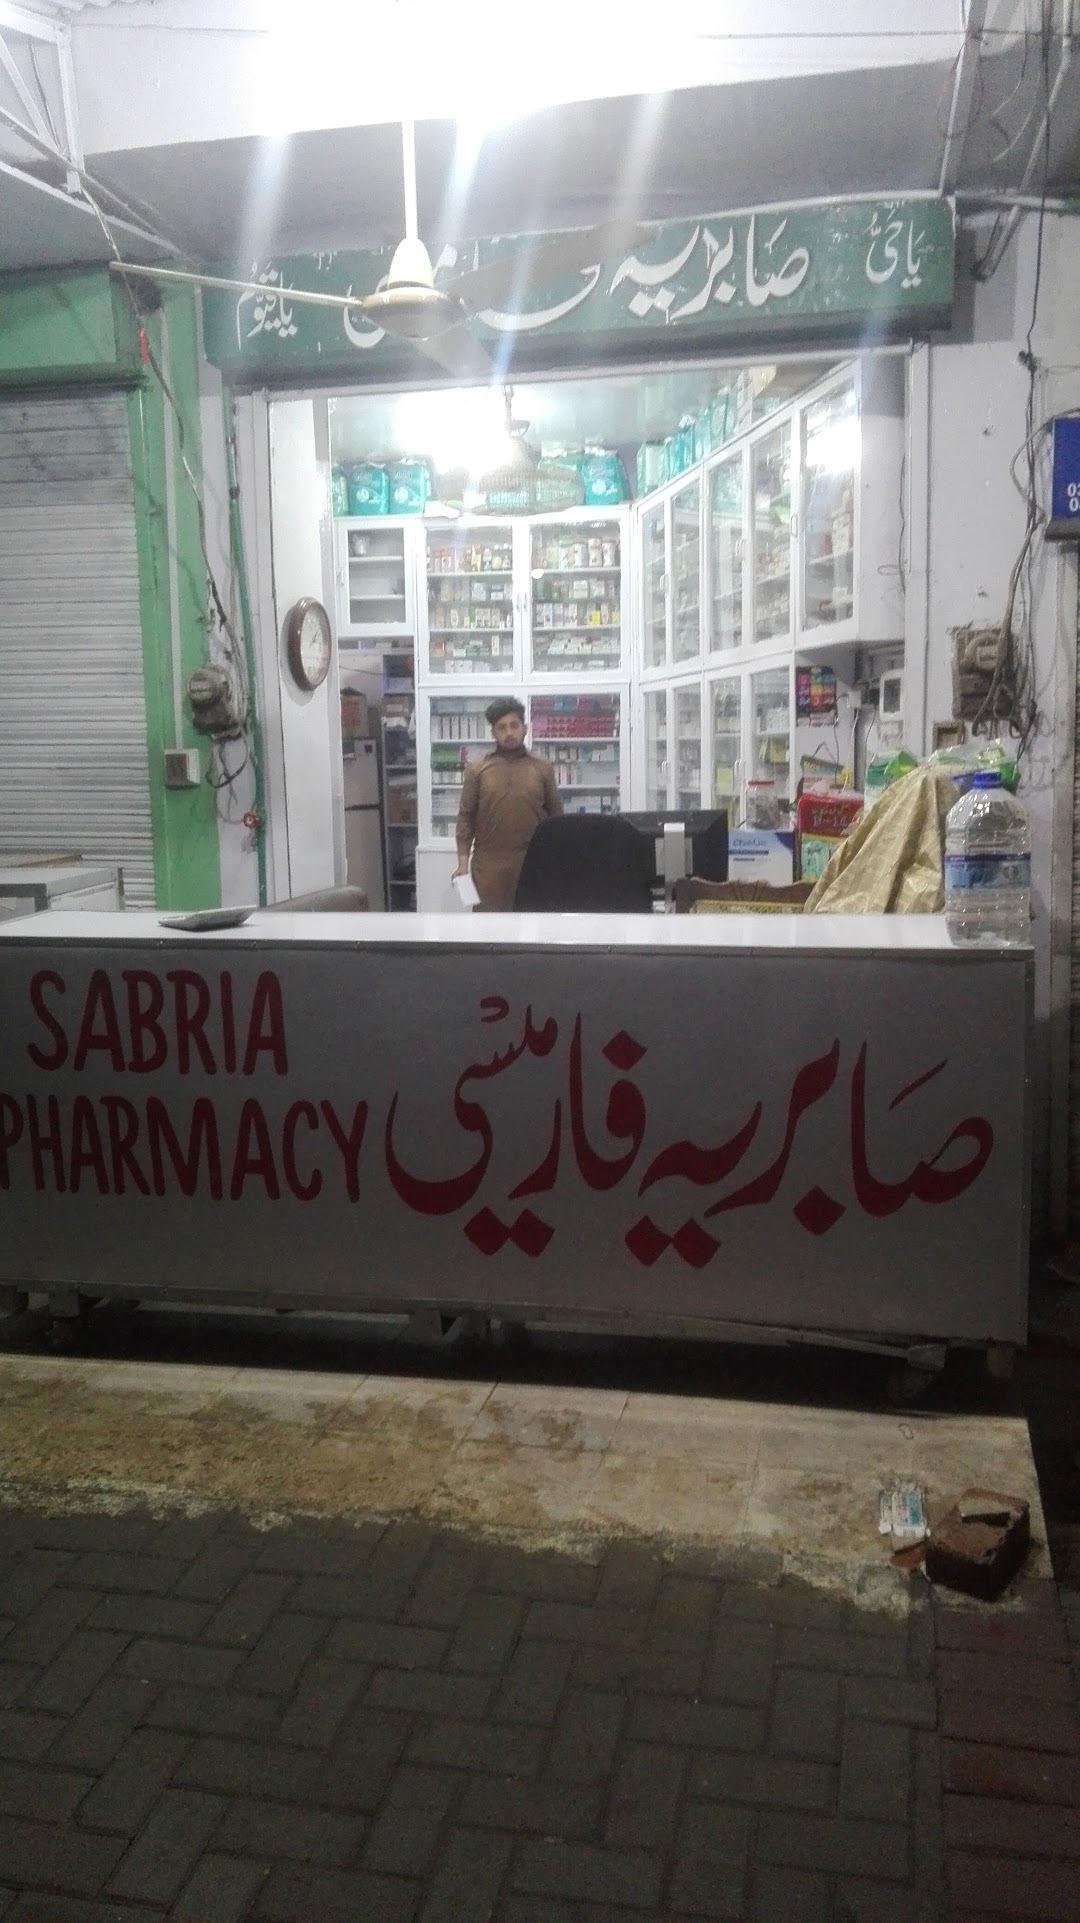 Sabria group of pharmacy